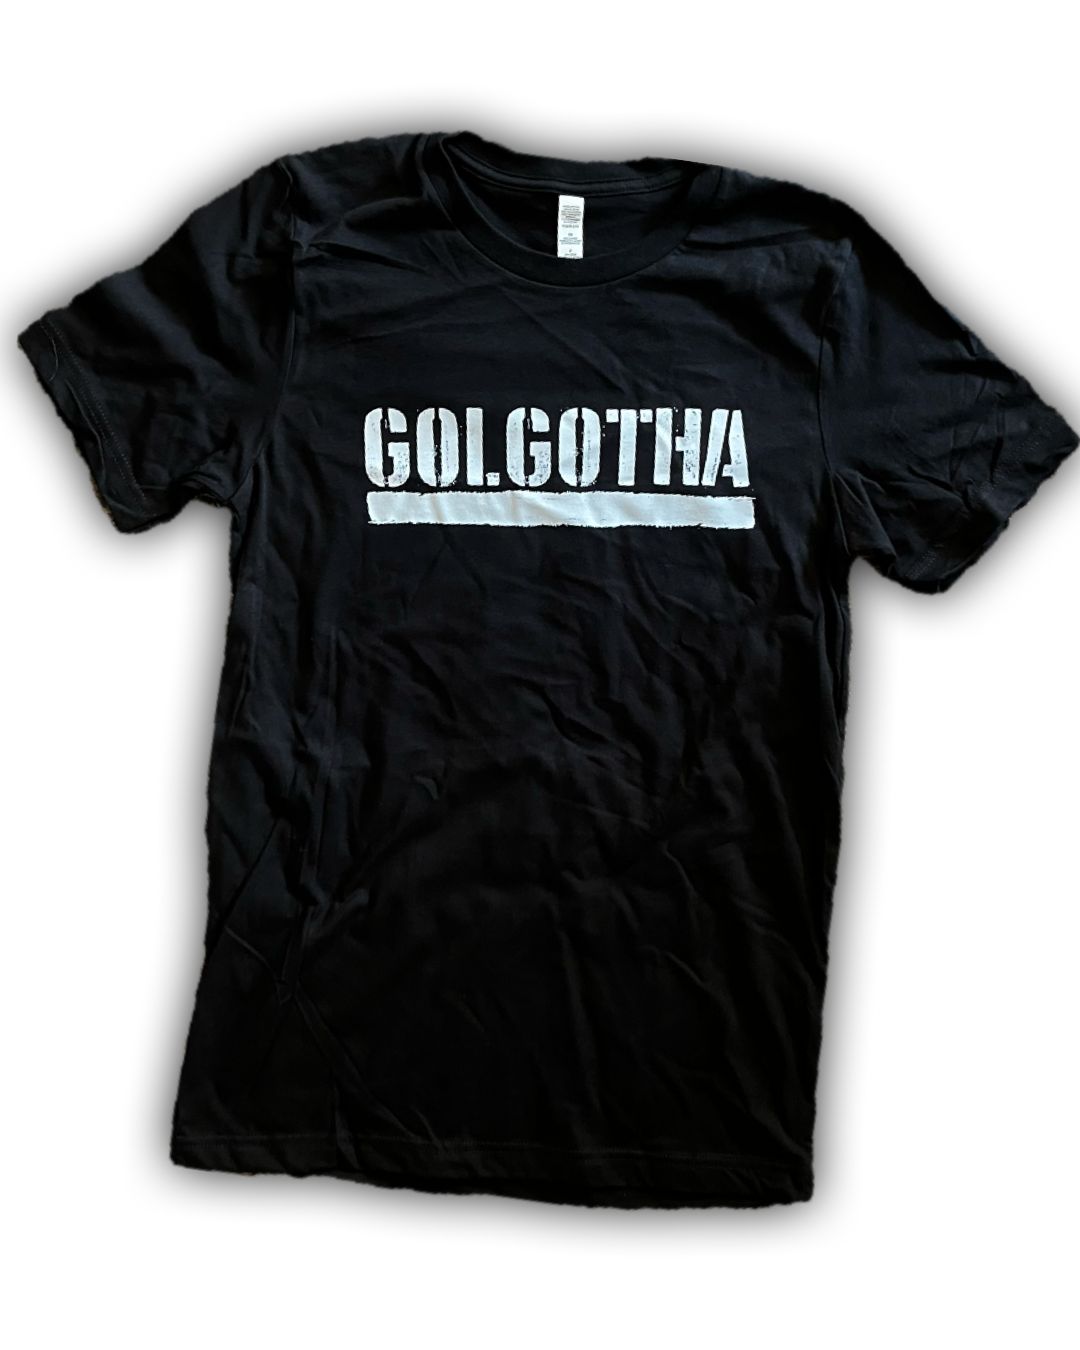 GOLGOTHA SHIRT